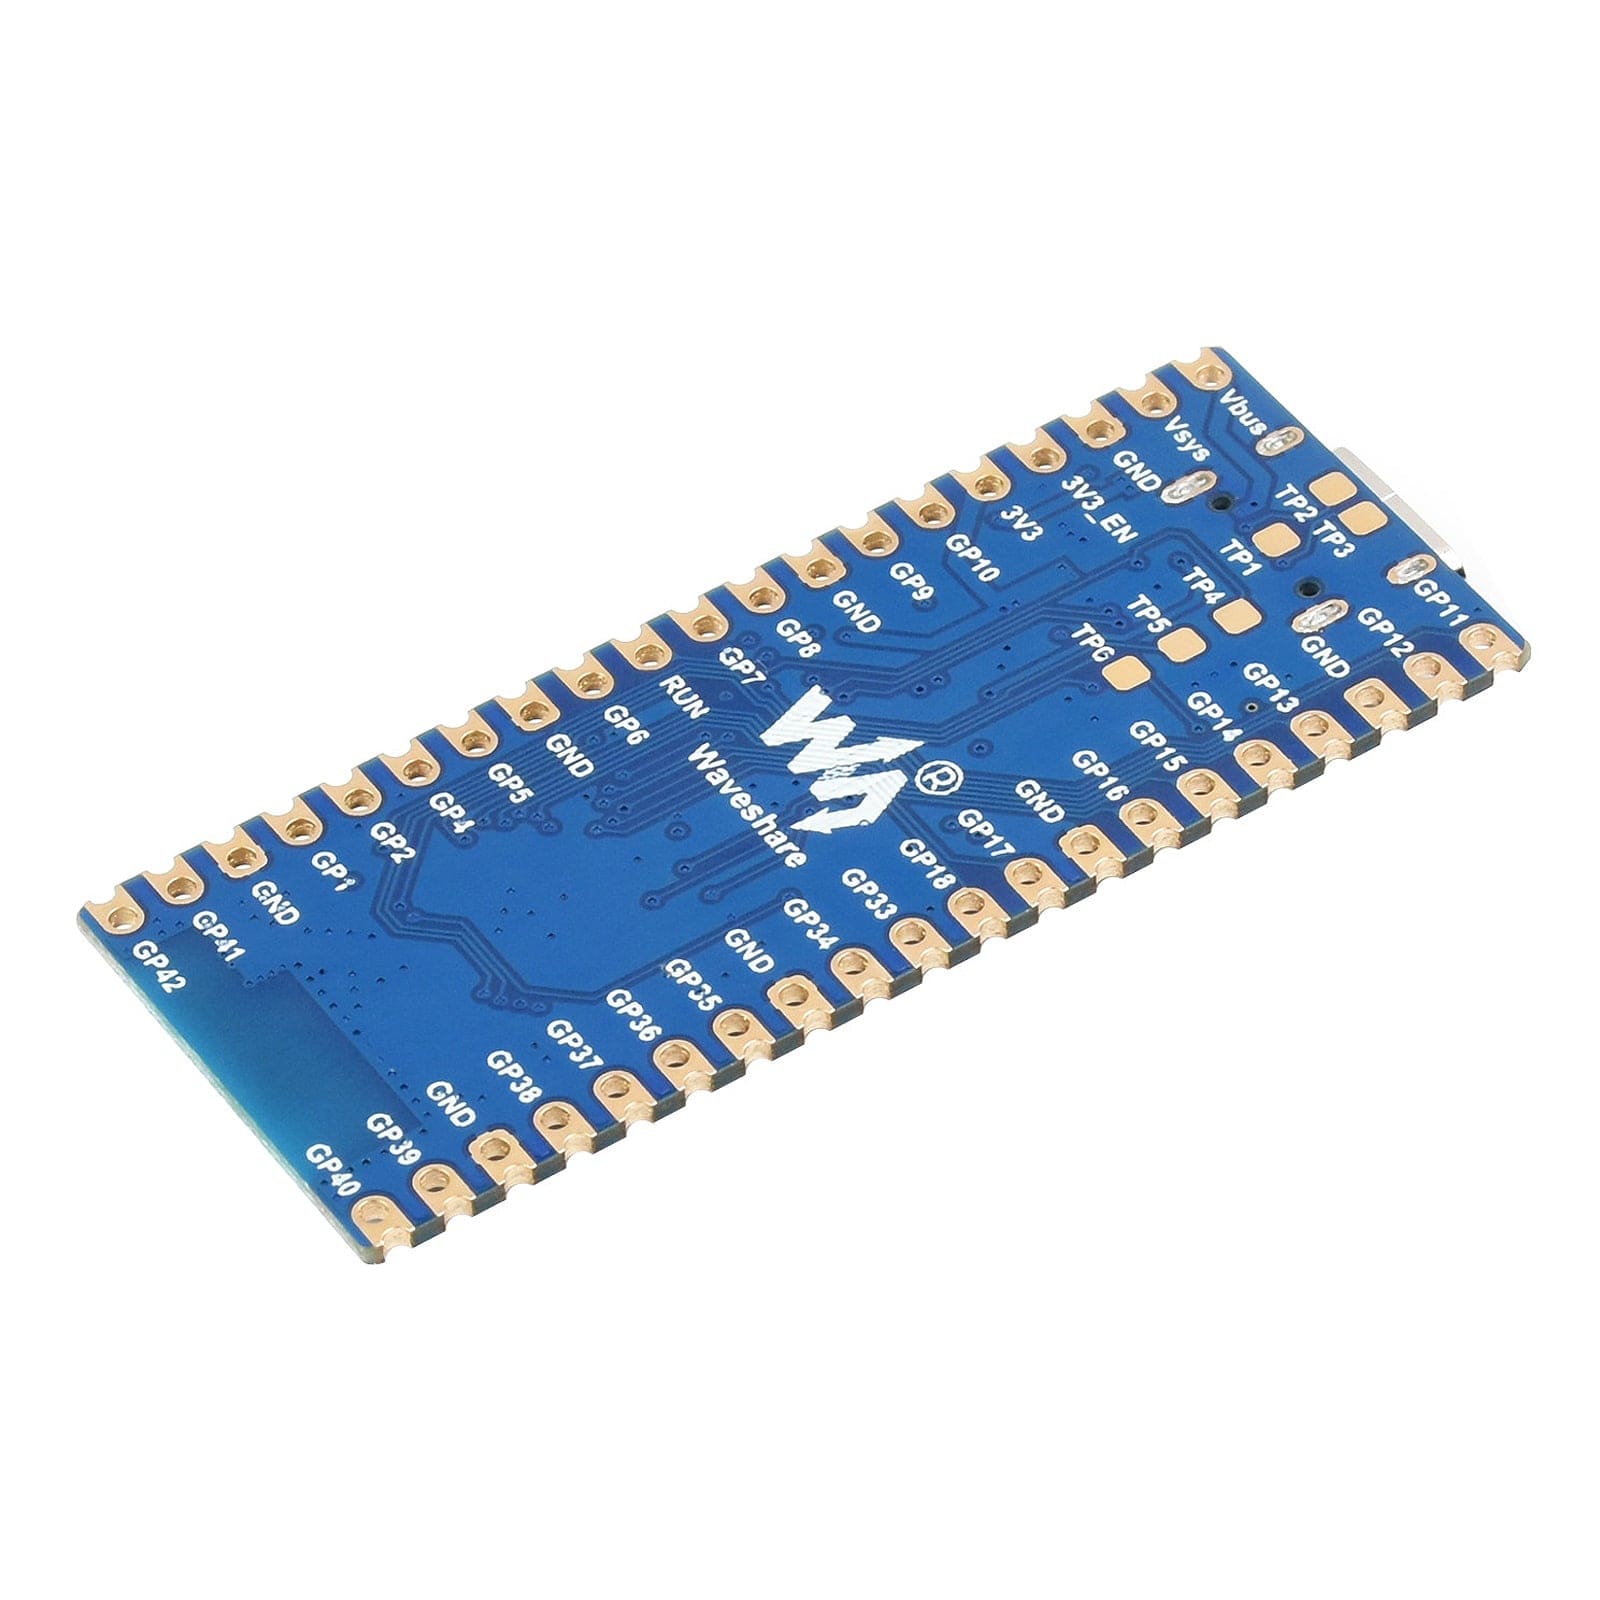 ESP32-S3 Microcontroller (2.4 GHz) - The Pi Hut